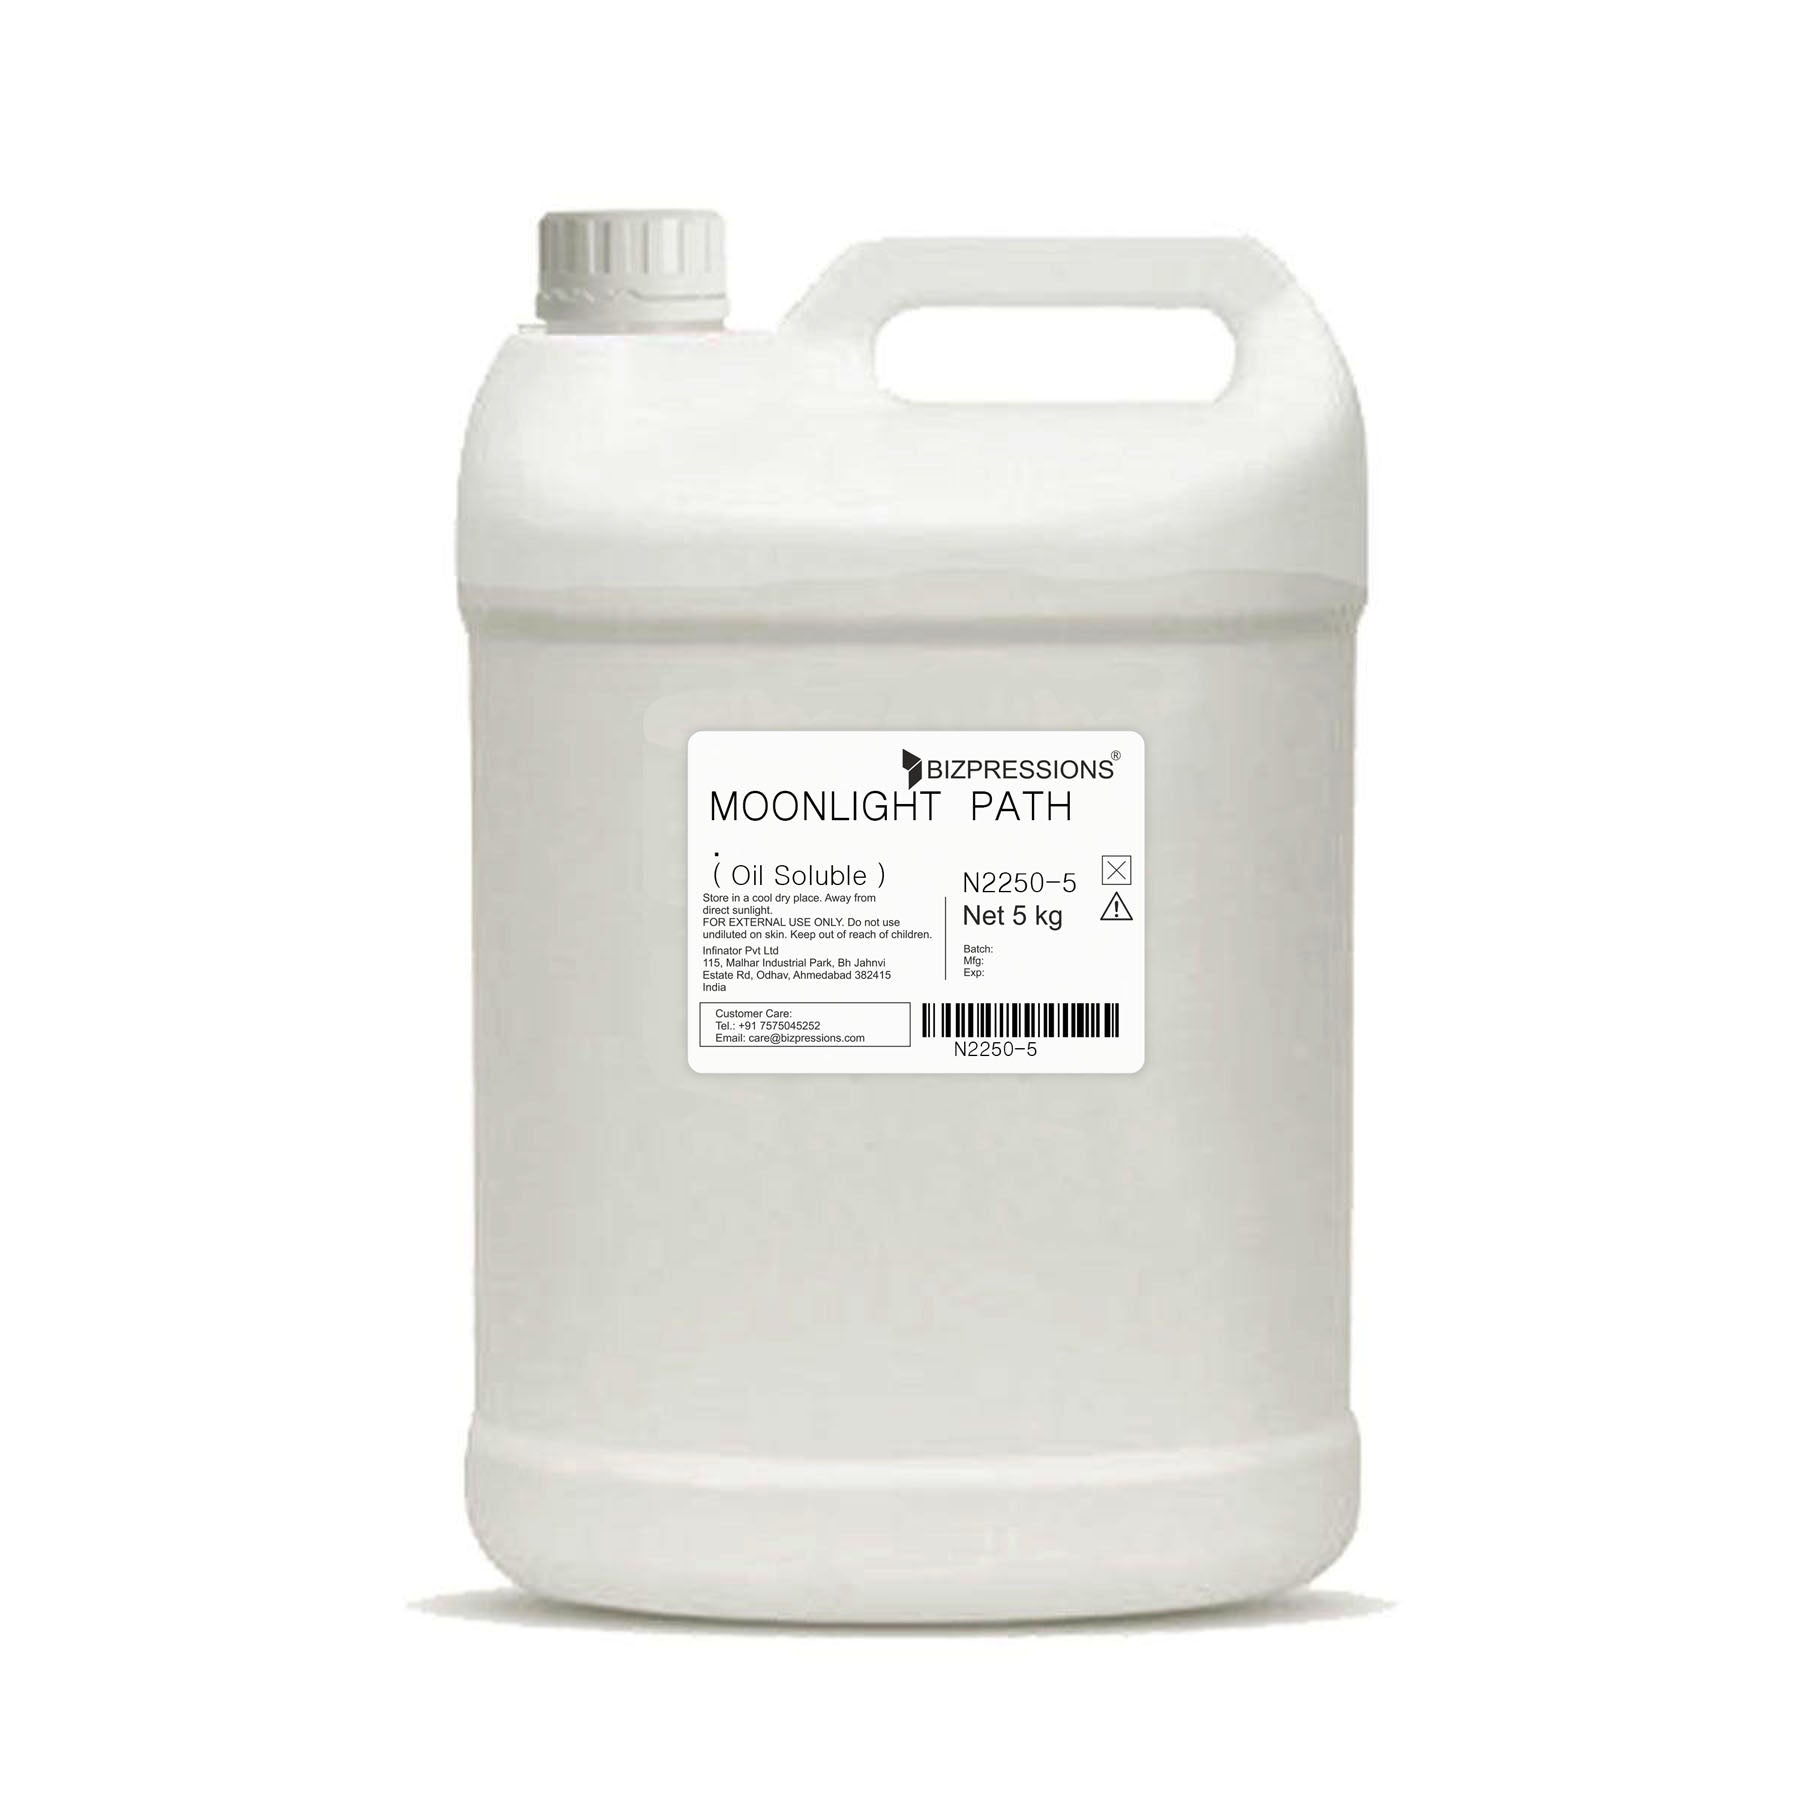 MOONLIGHT PATH - Fragrance ( Oil Soluble ) - 5 kg